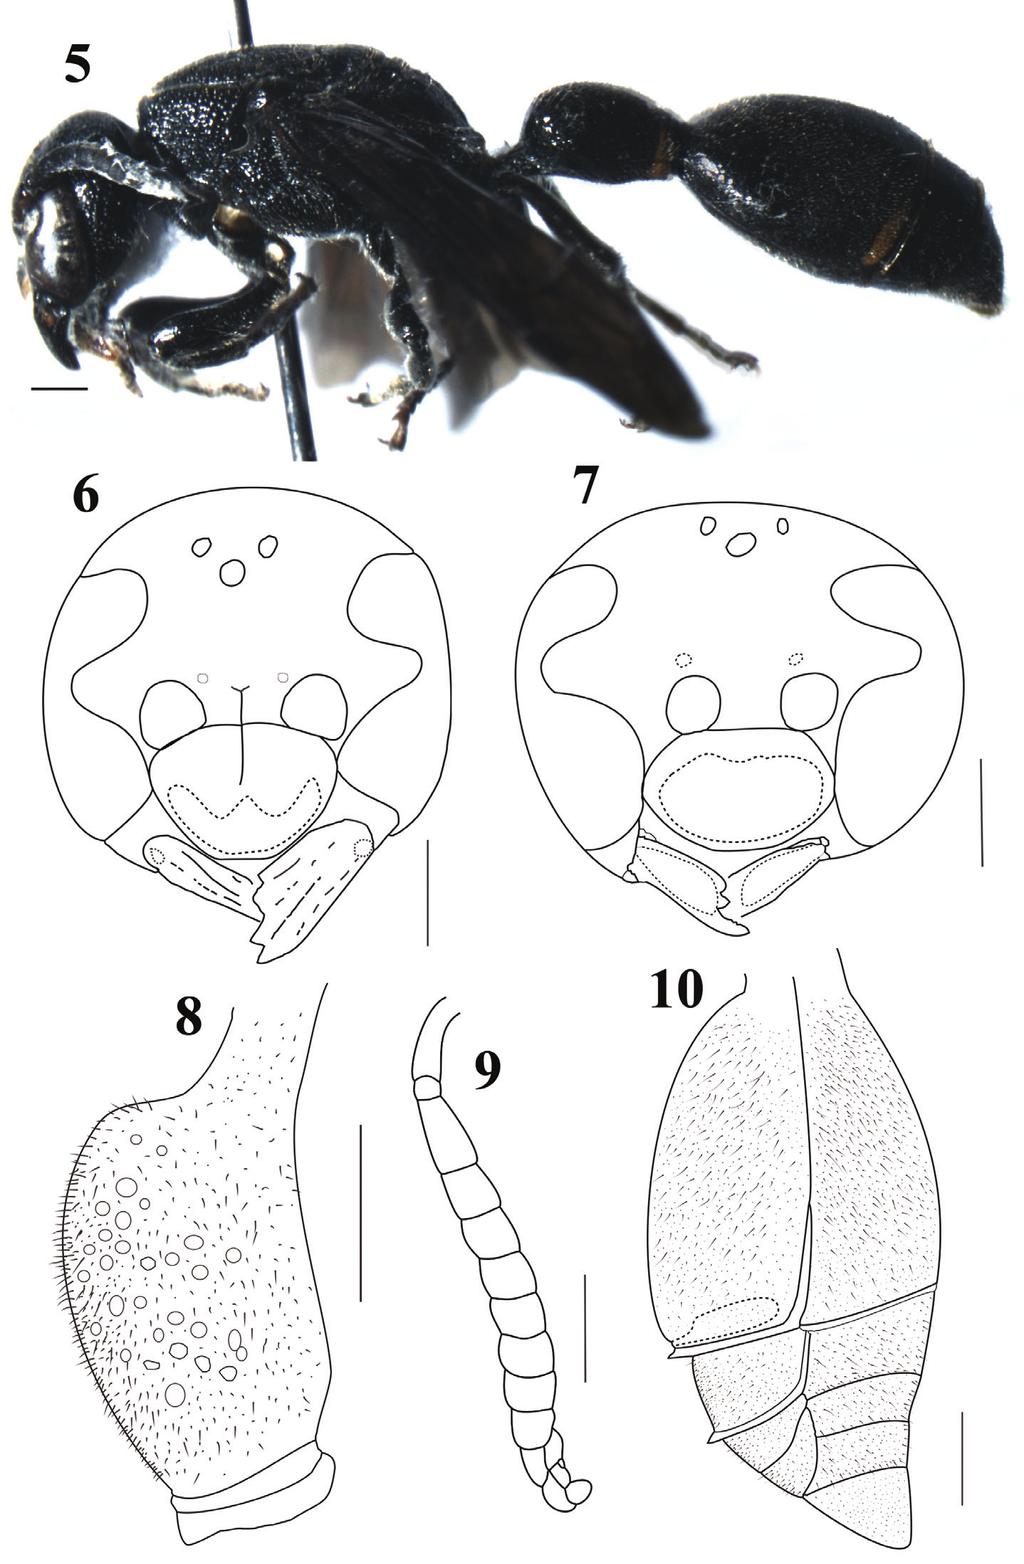 50 Xin Zhou et al. / Journal of Hymenoptera Research 32: 45 54 (2013) Figures 5 10. Discoelius emeishanensus Zhou and Li, sp. n.